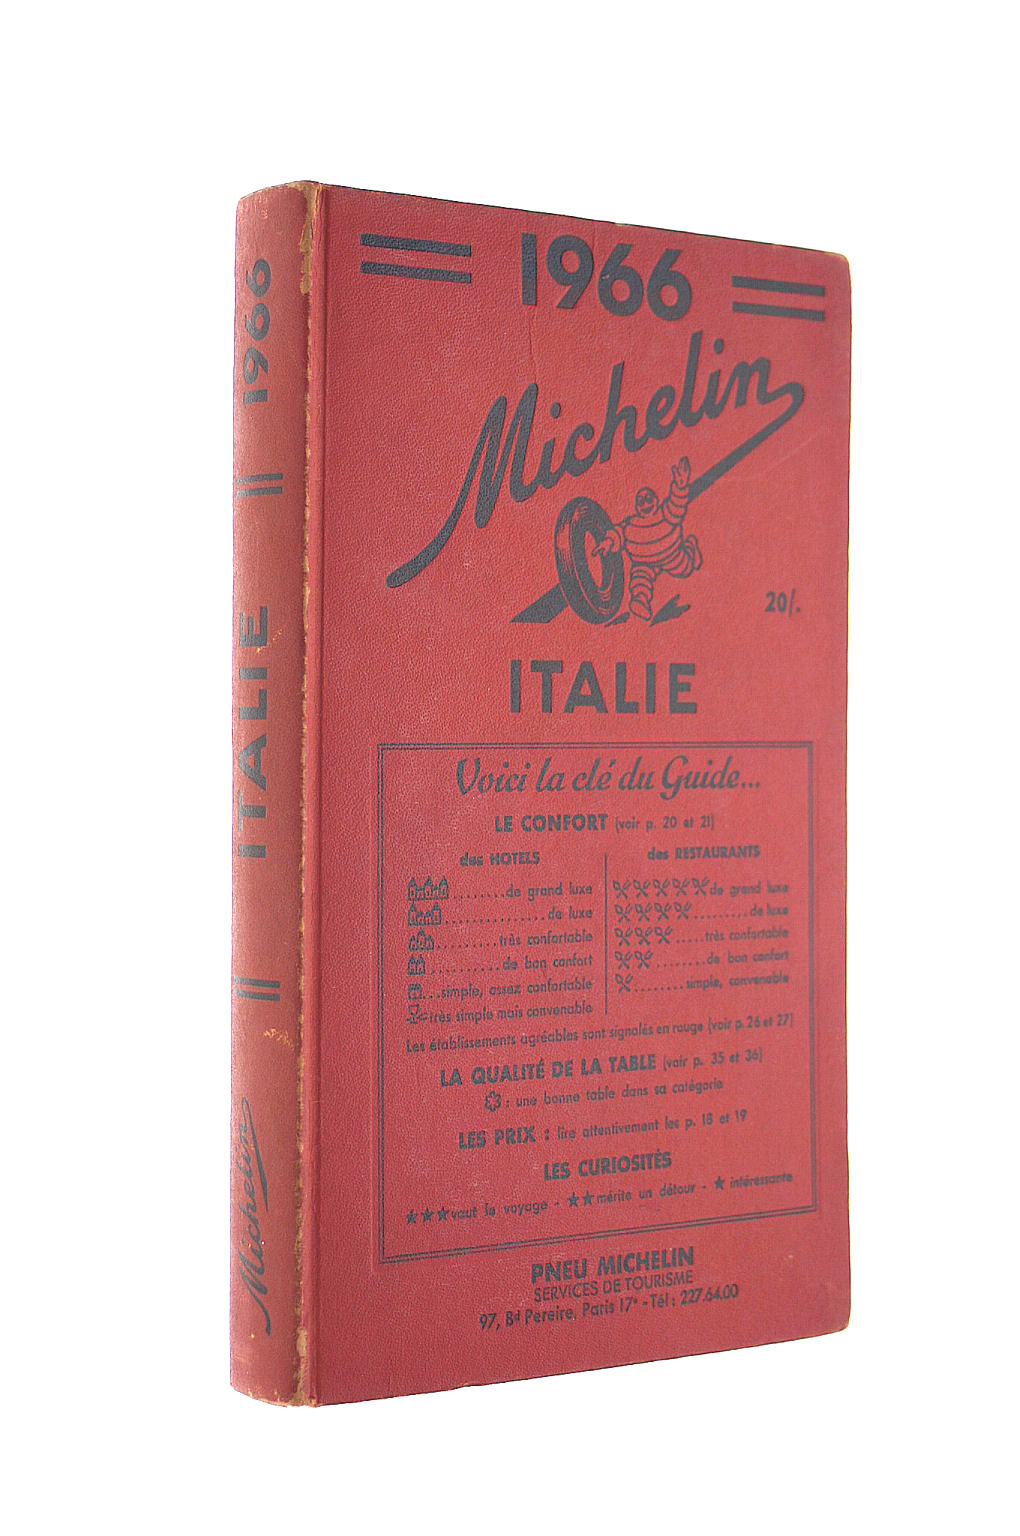 (PNEU MICHELIN) - Michelin Italie 1966